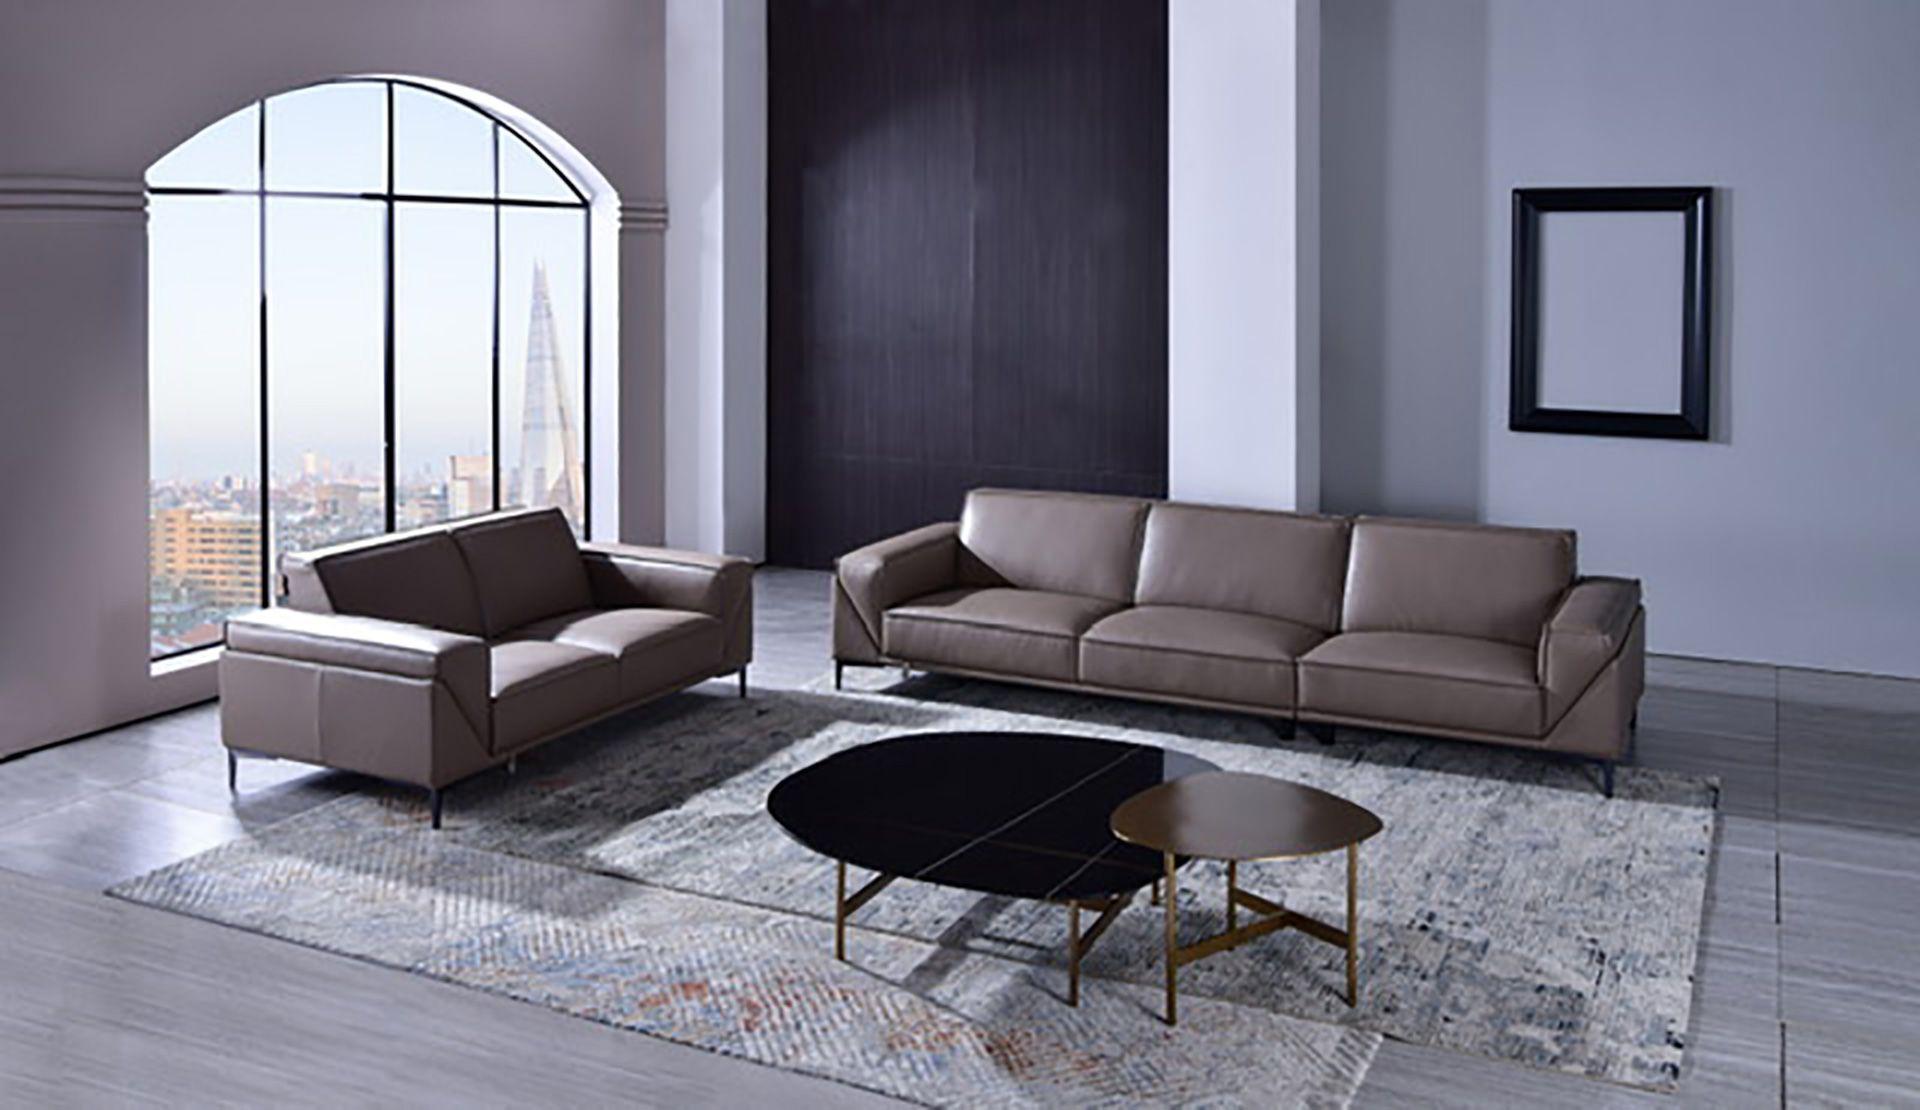 Contemporary Sofa Set EK1302-DT-4S EK1302-DT-4S-2PC in Dark Tan, Tan Leather